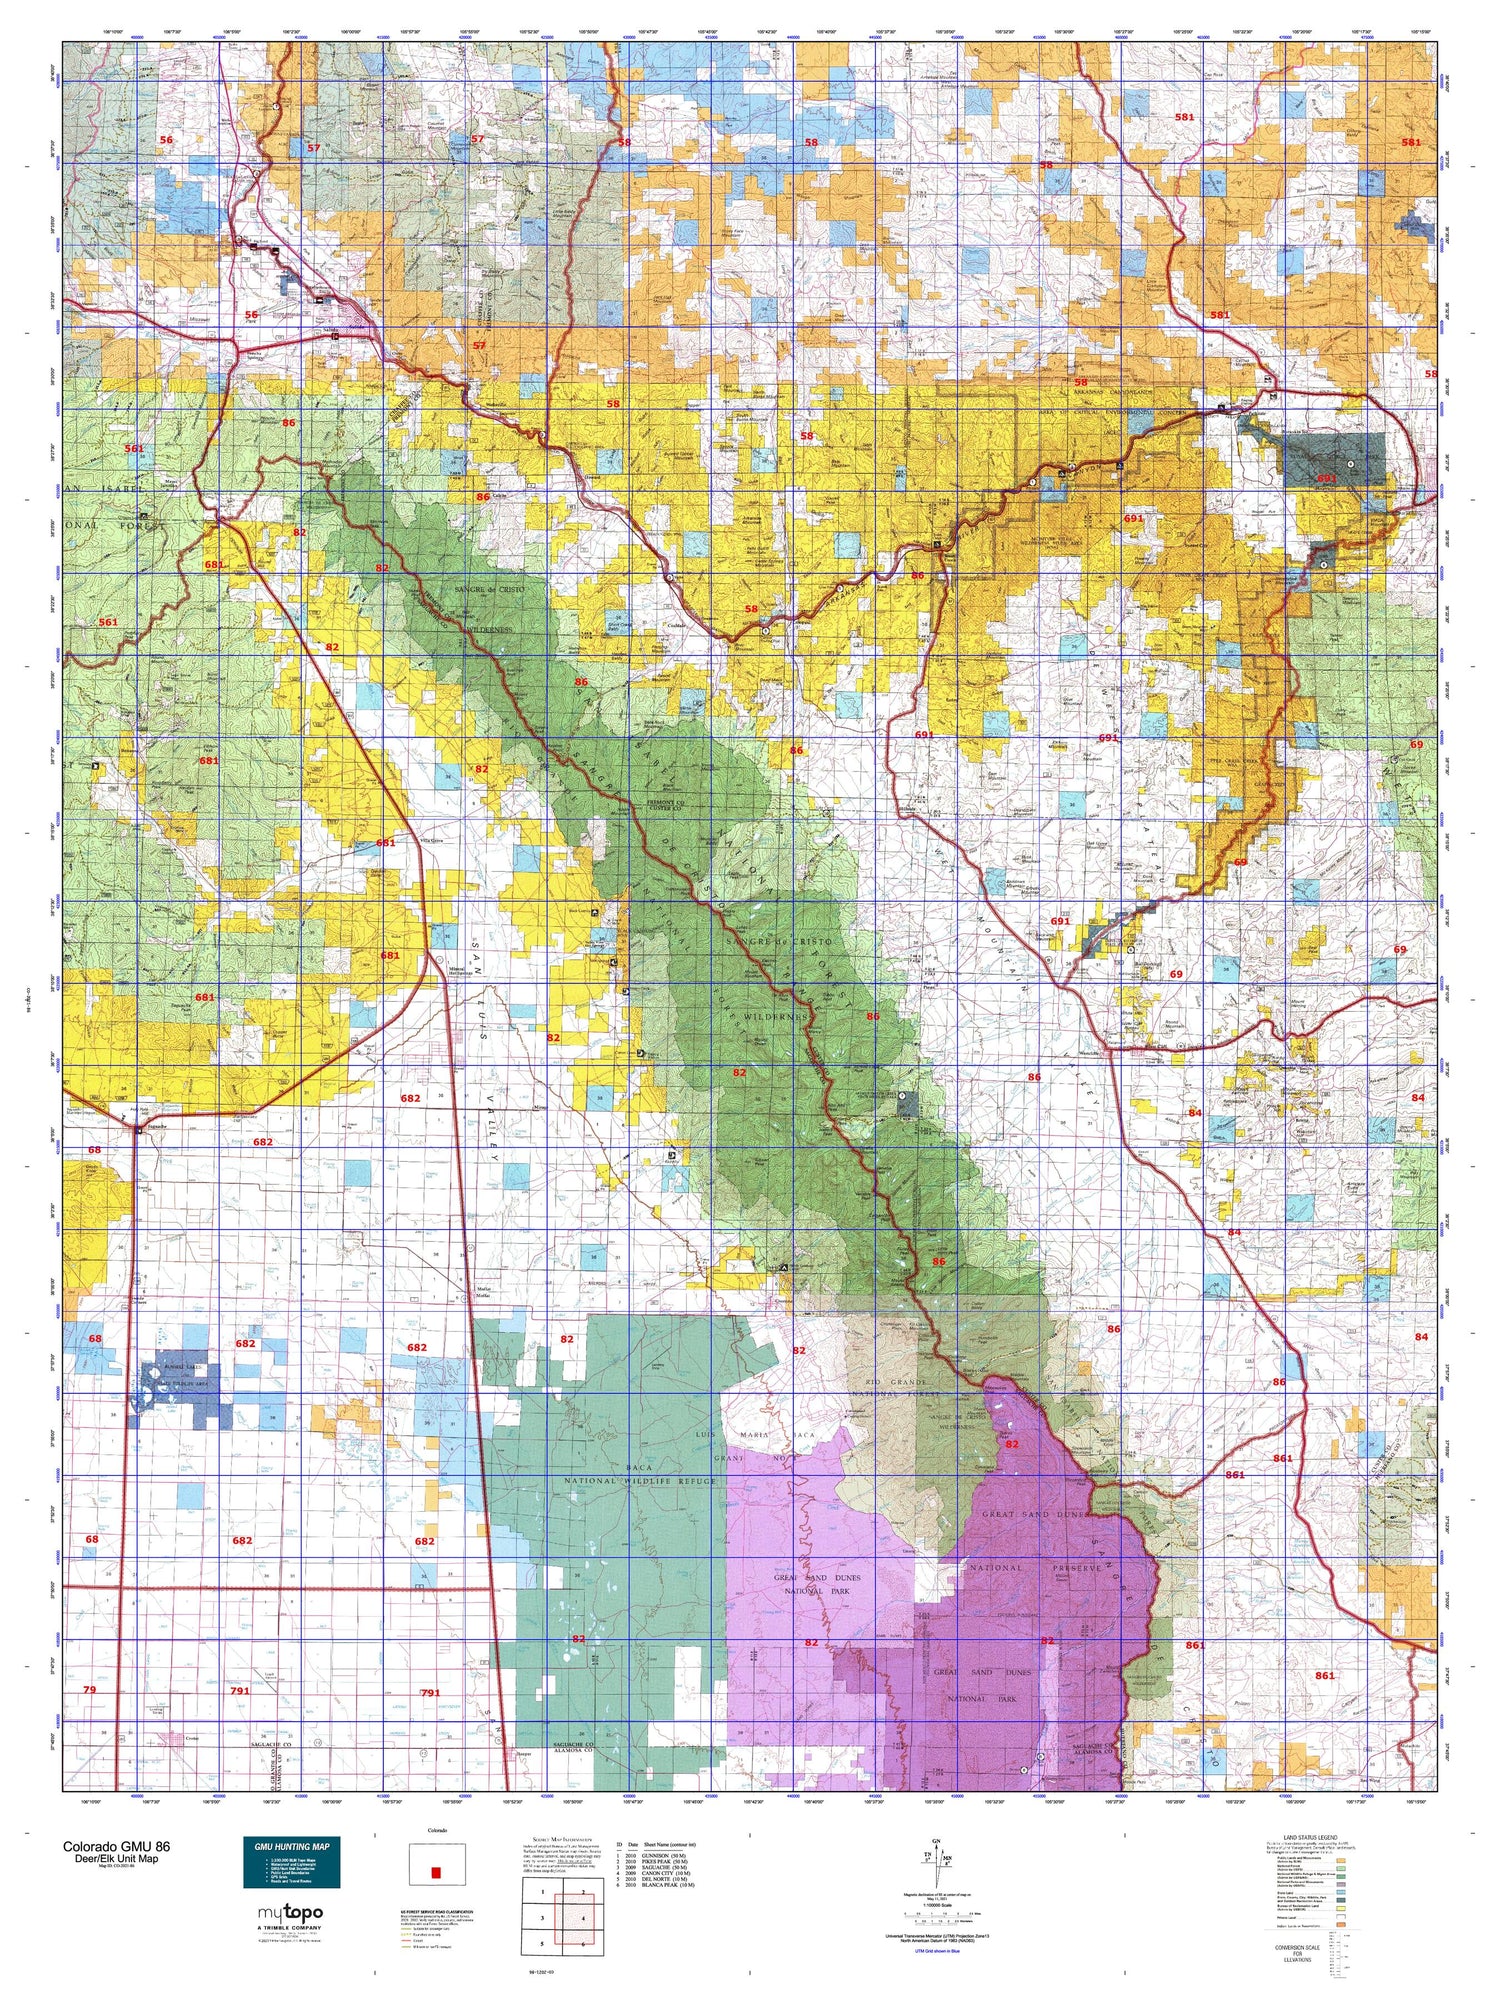 Colorado GMU 86 Map Image